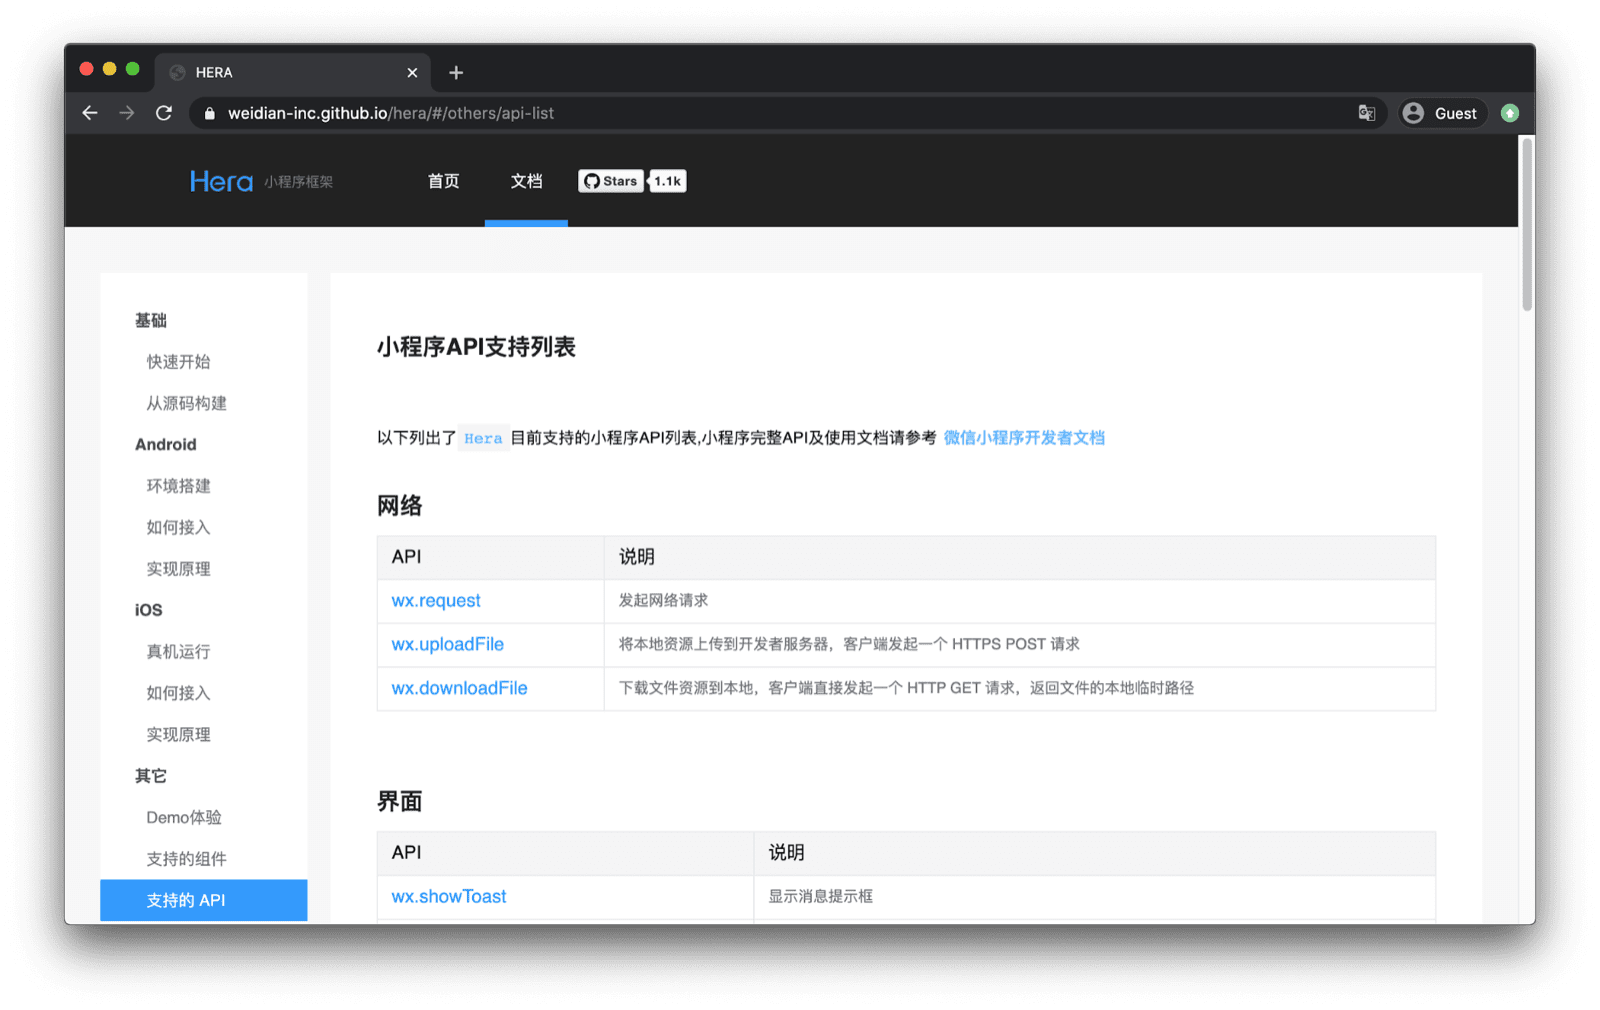 &quot;wx.request&quot;, &quot;wx.uploadFile&quot; vb. desteklenen WeChat API&#39;lerinin listelendiği Hera mini uygulama çerçevesiyle ilgili dokümanlar.